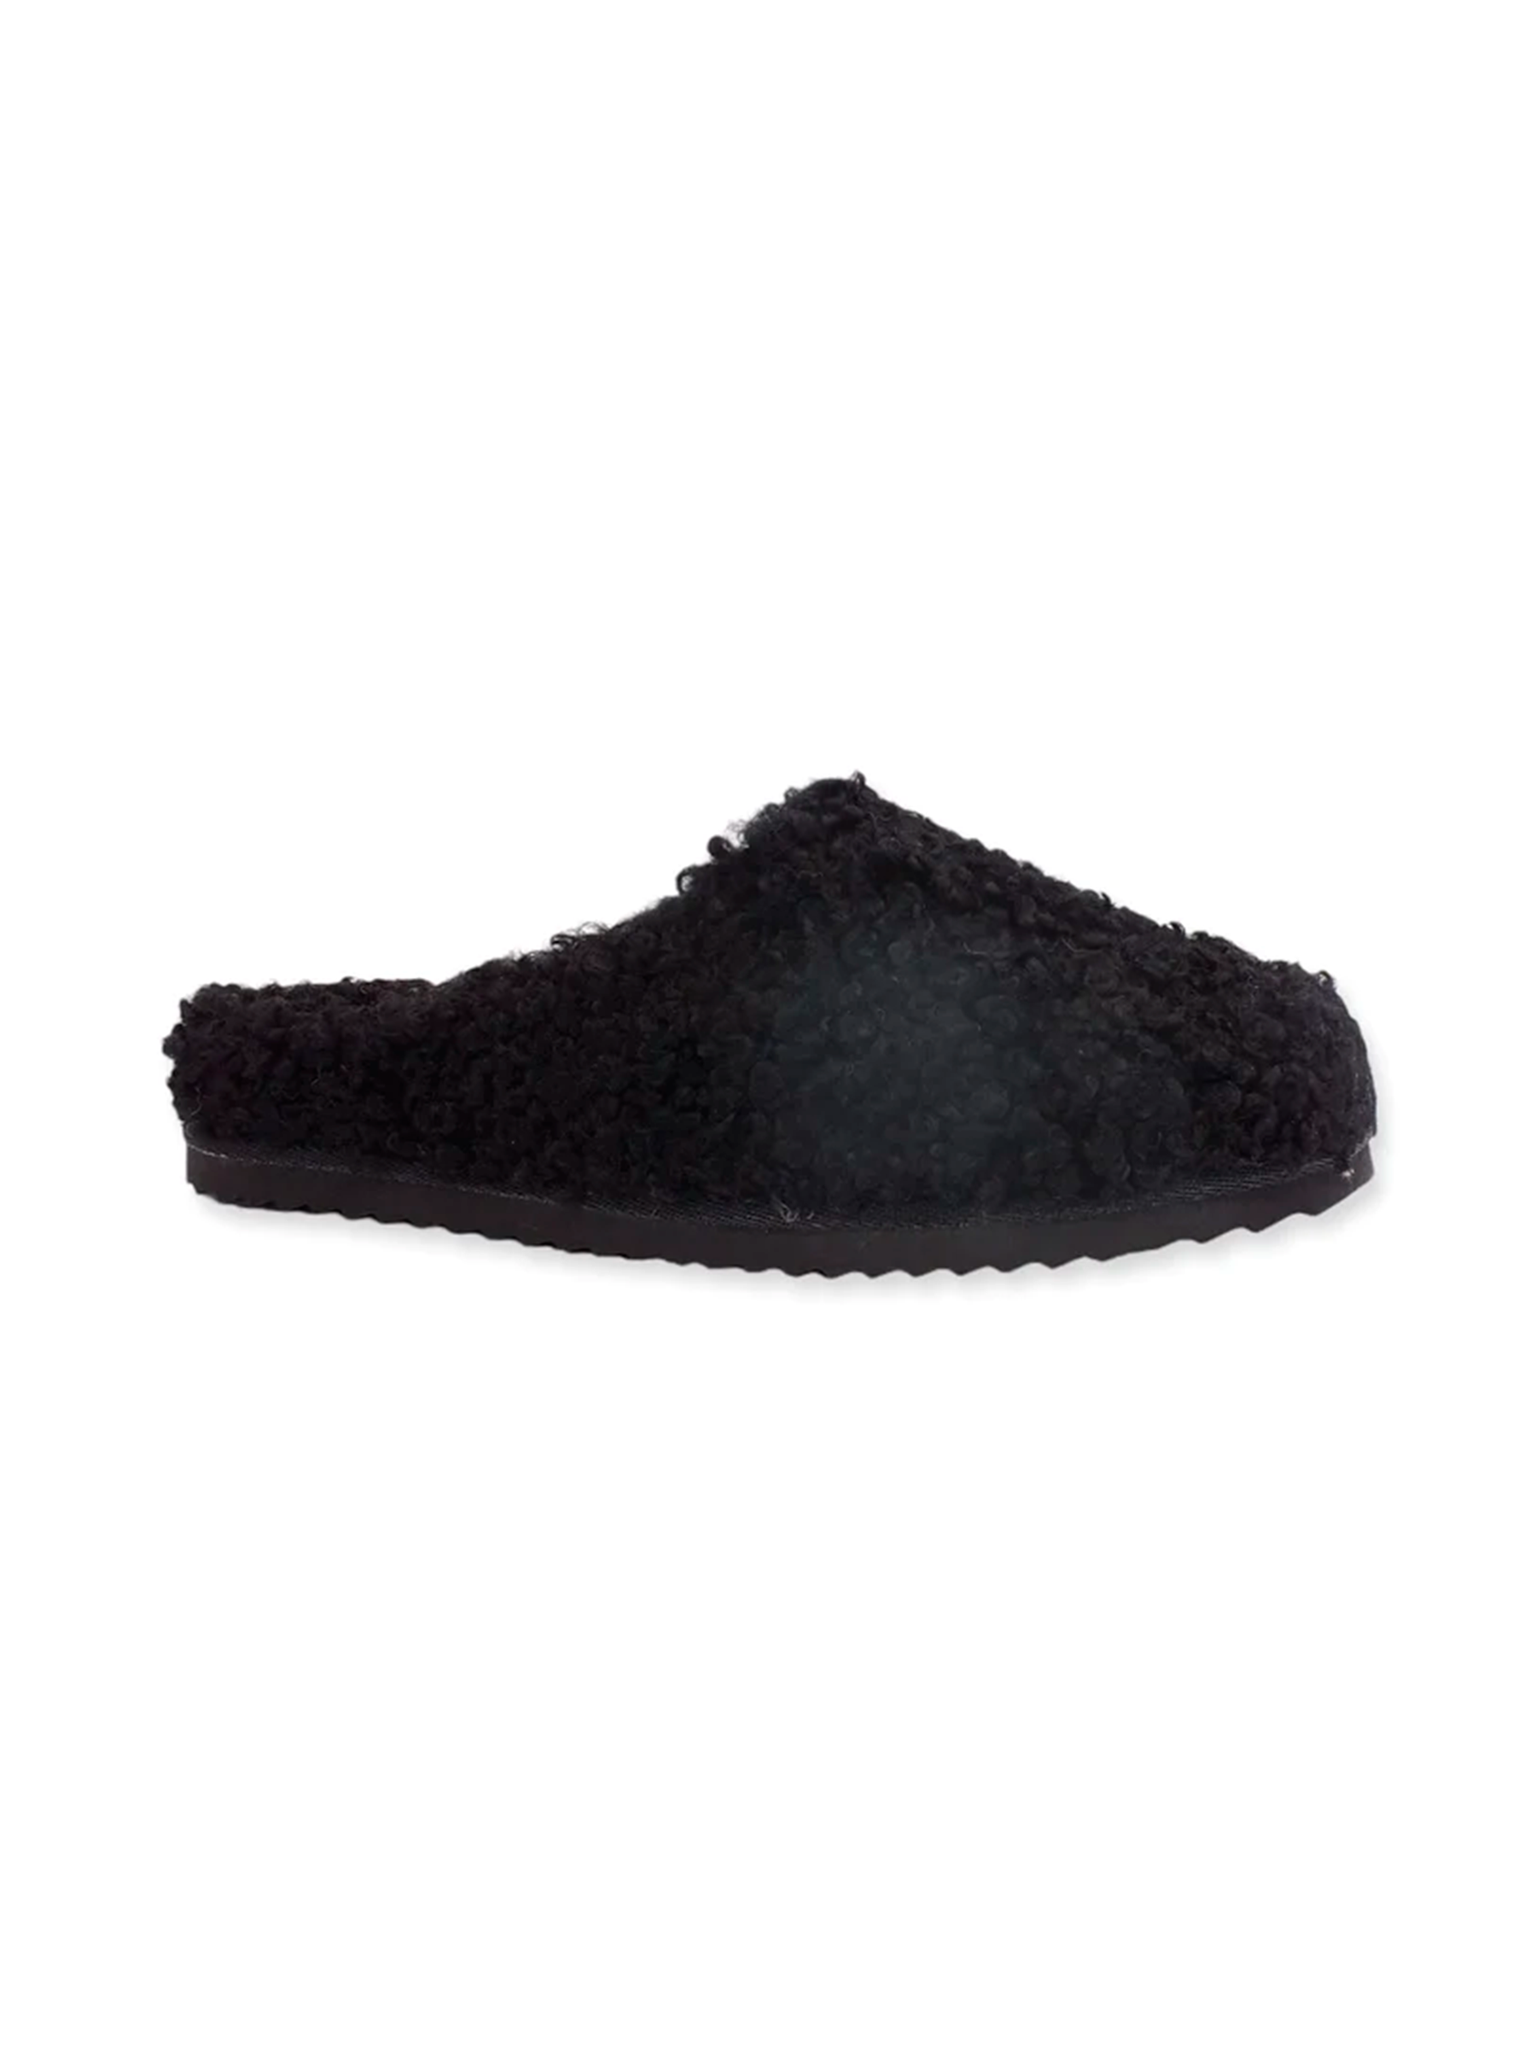 Furry slipper closed toe Black